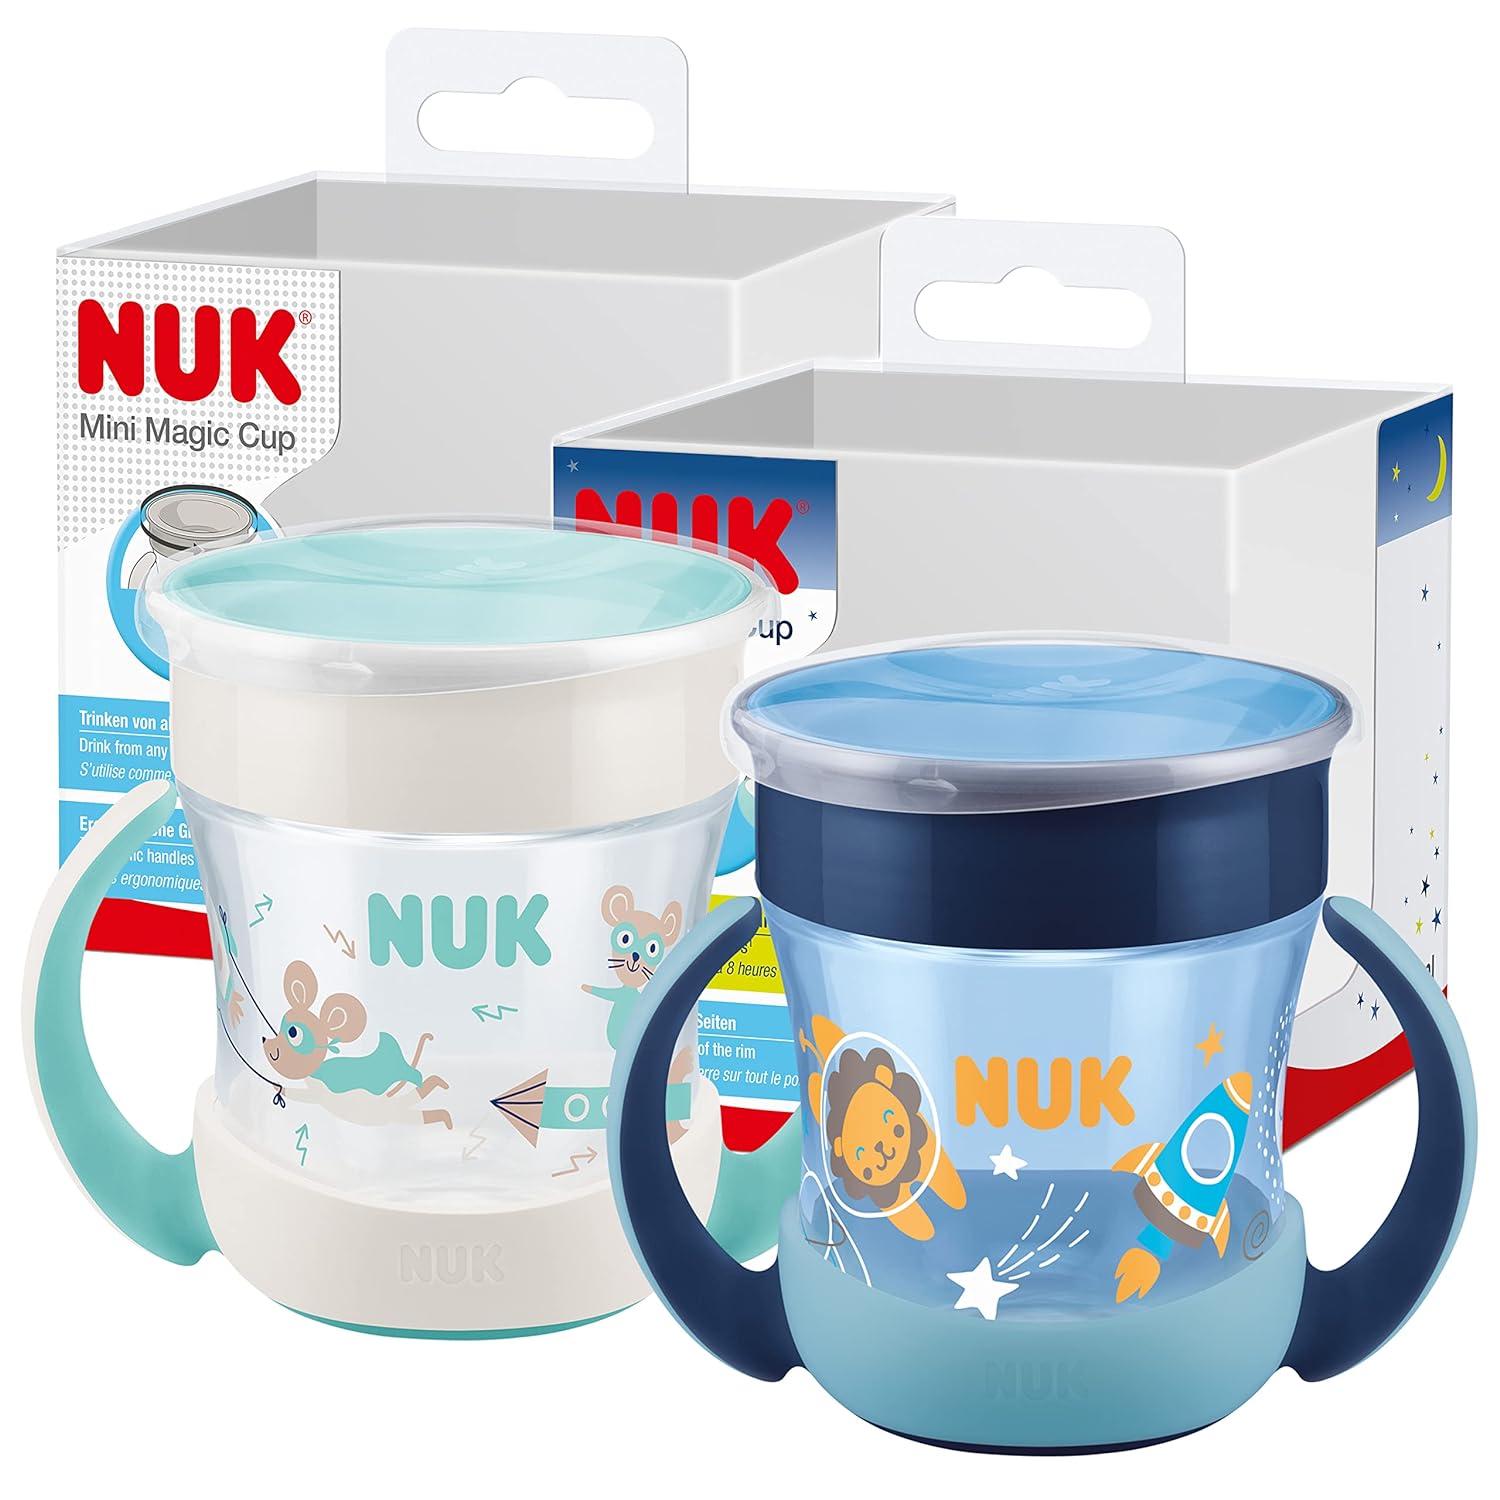 NUK Mini-Magic Cup - £8.20